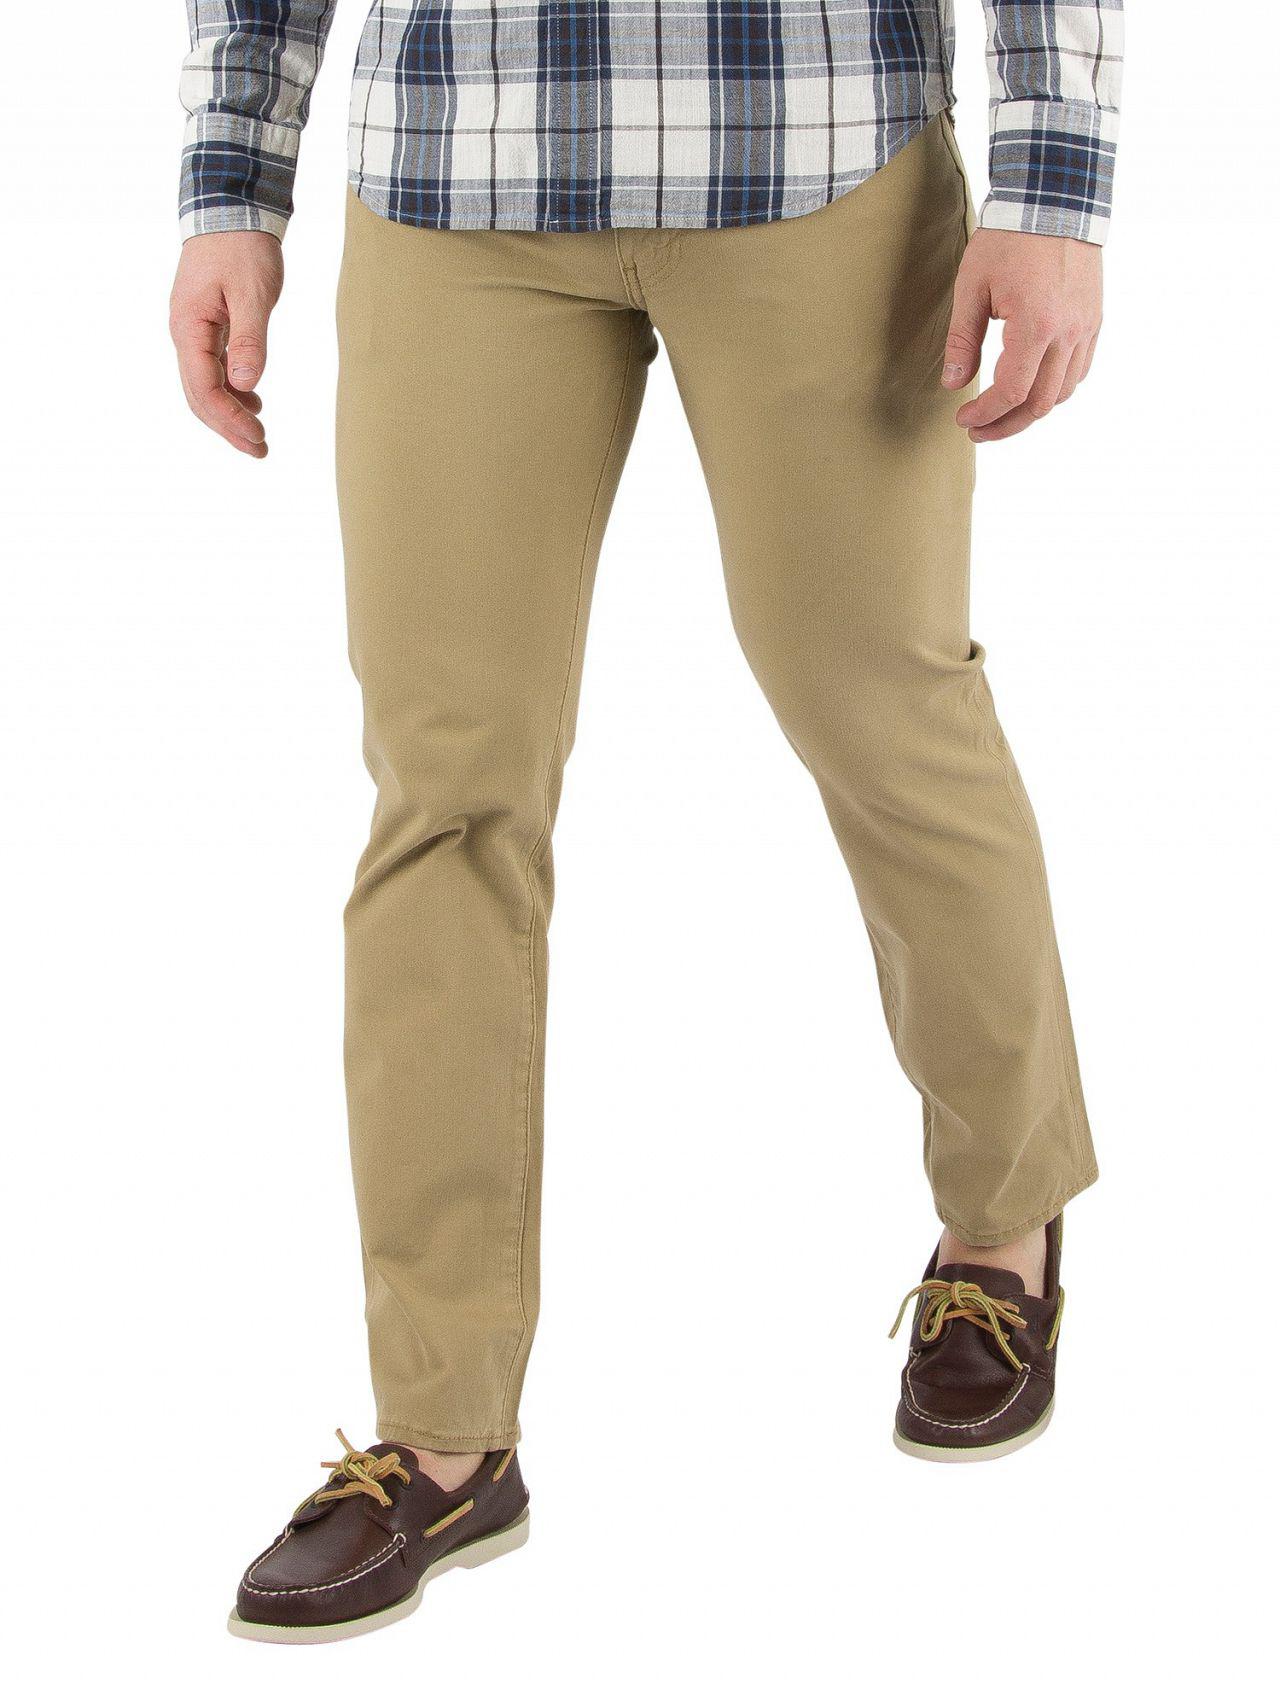 Svane flise Gensidig Levi's Harvest Gold 511 Slim Fit Jeans in Metallic for Men | Lyst Canada